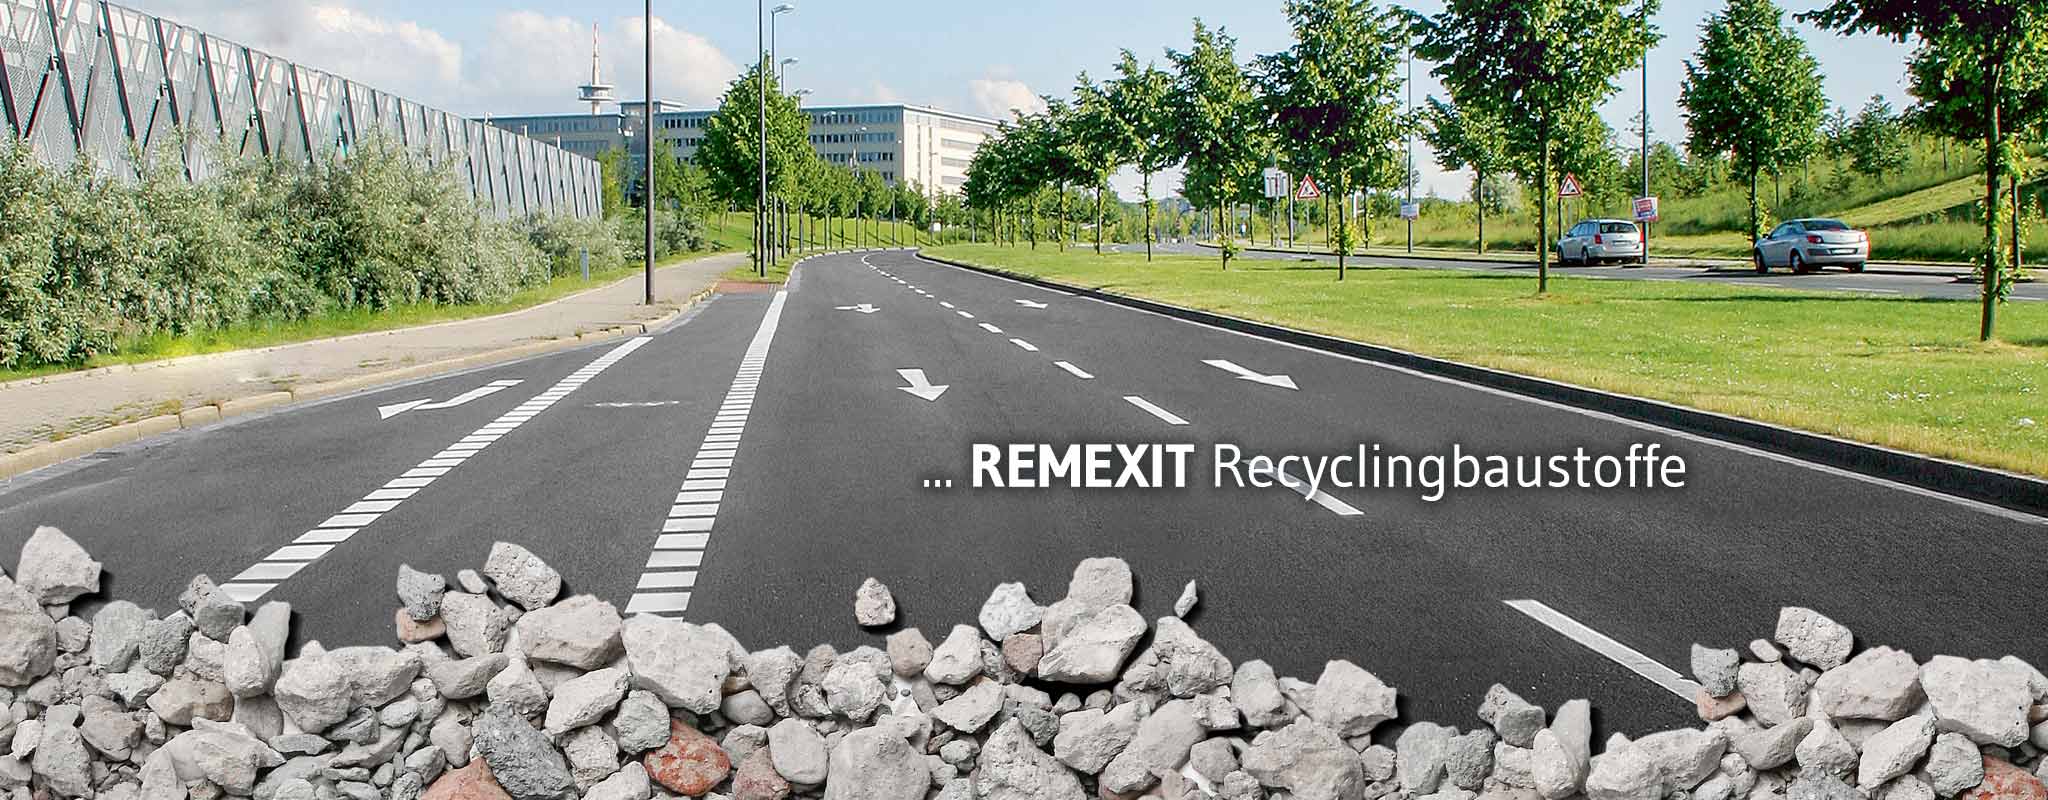 Hochwertiges Baustoffrecyclingergebnis: Recyclingbaustoffe der Marke ergibt REMEXIT rx_sol_home-slide_E_remexit_DE_01b.jpg